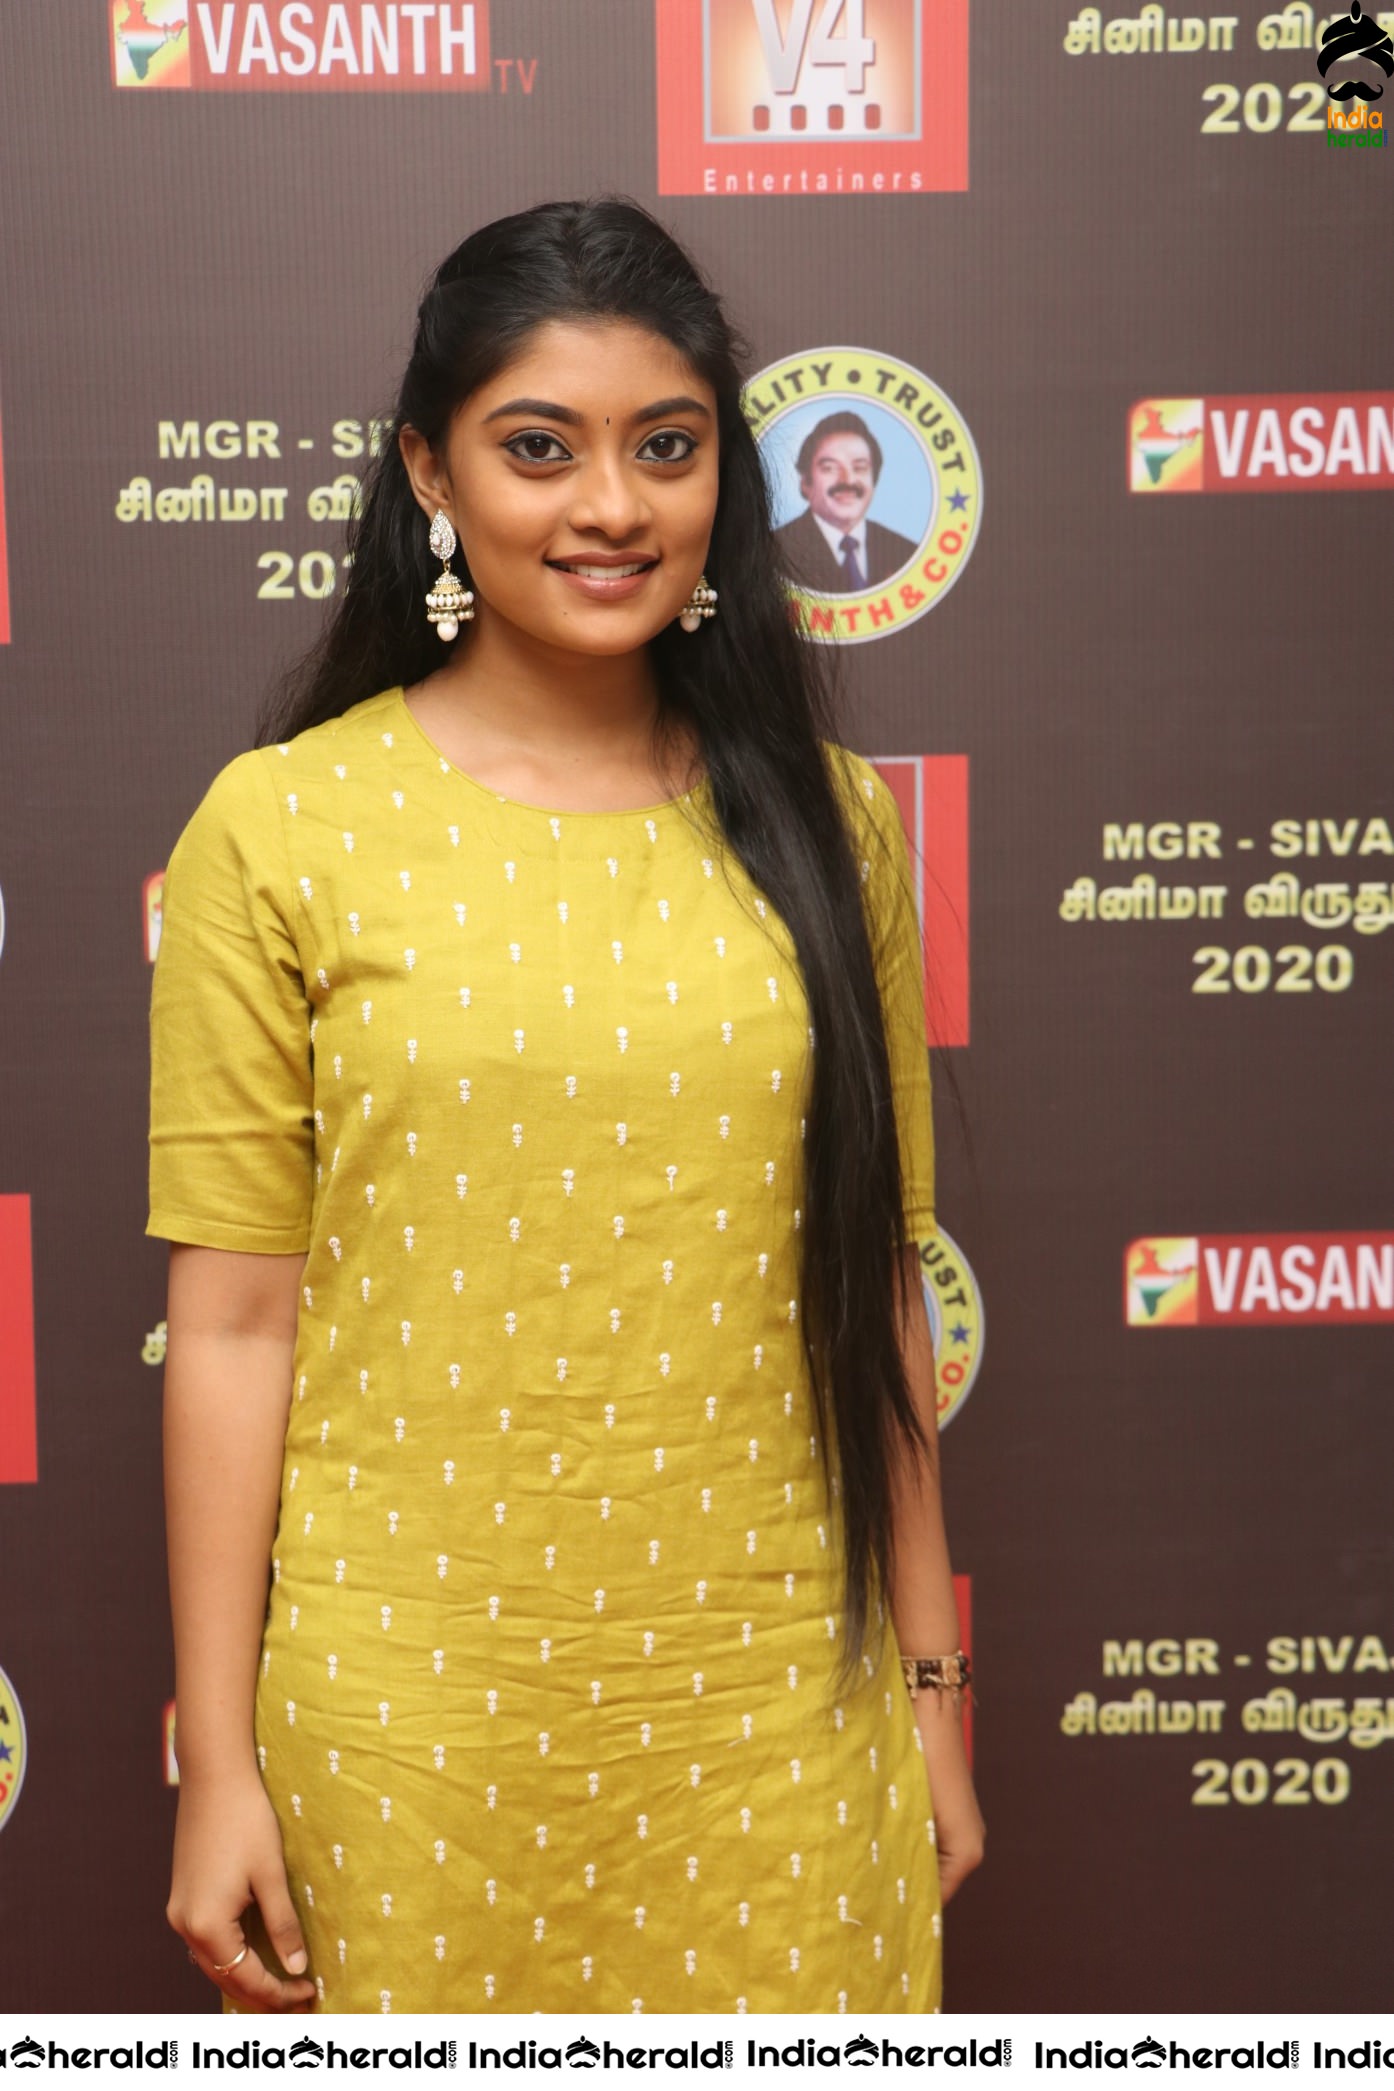 V4 MGR Sivaji Award Show Event Photos Set 1